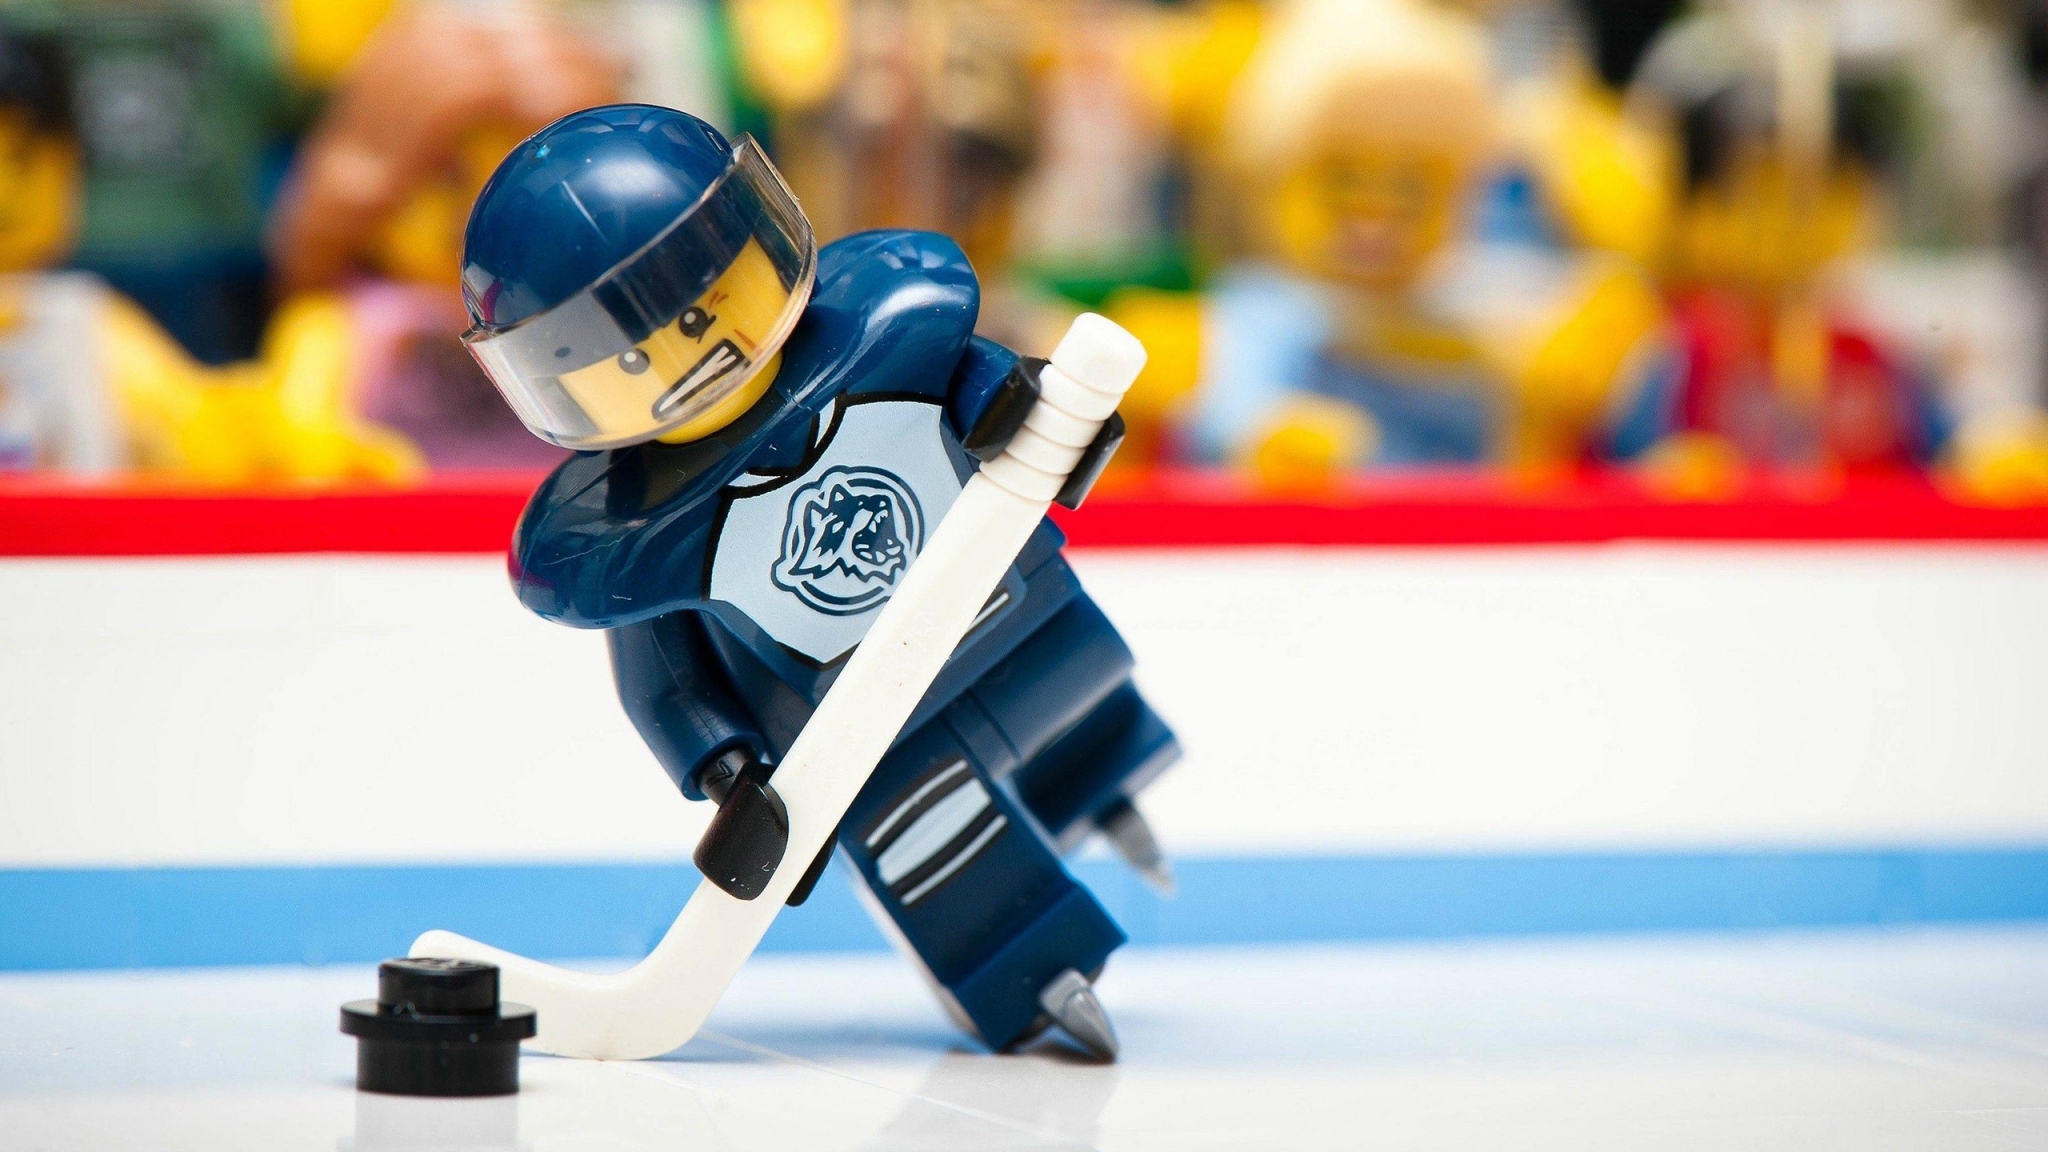 Desktop Wallpaper Lego Toys Of Hockey Player Hd Image Picture Background Gtnpgg